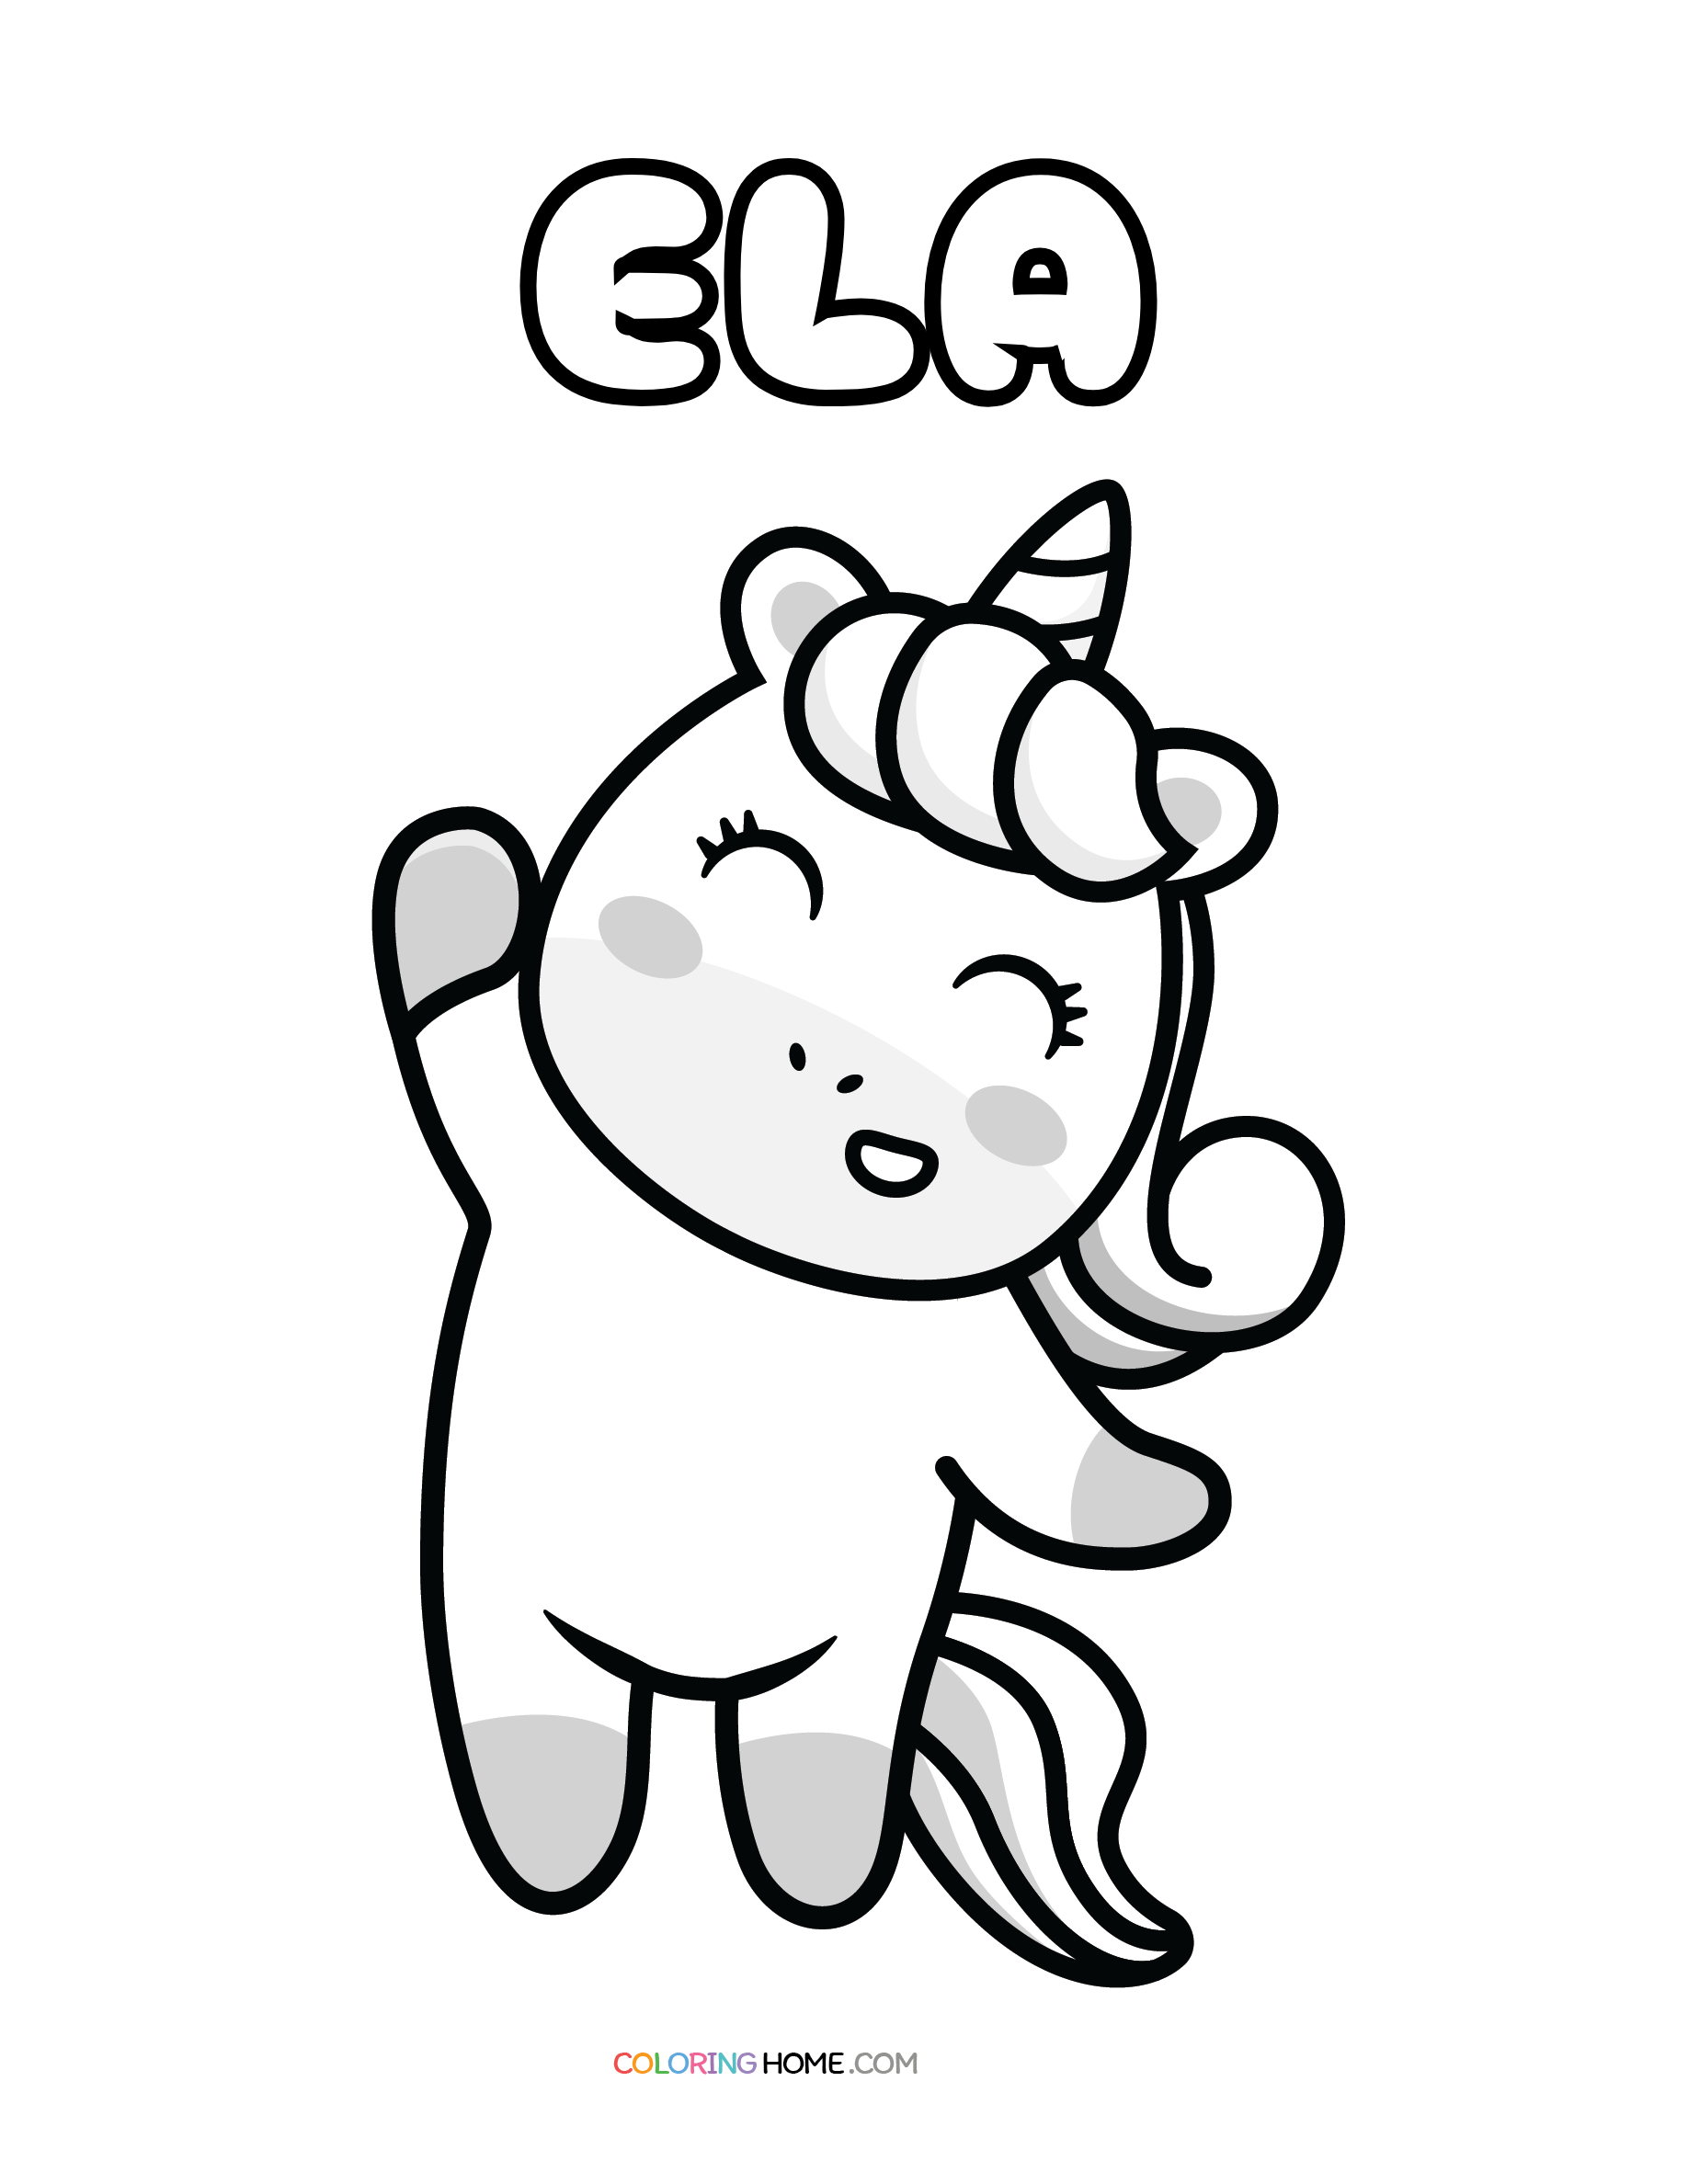 Ela unicorn coloring page